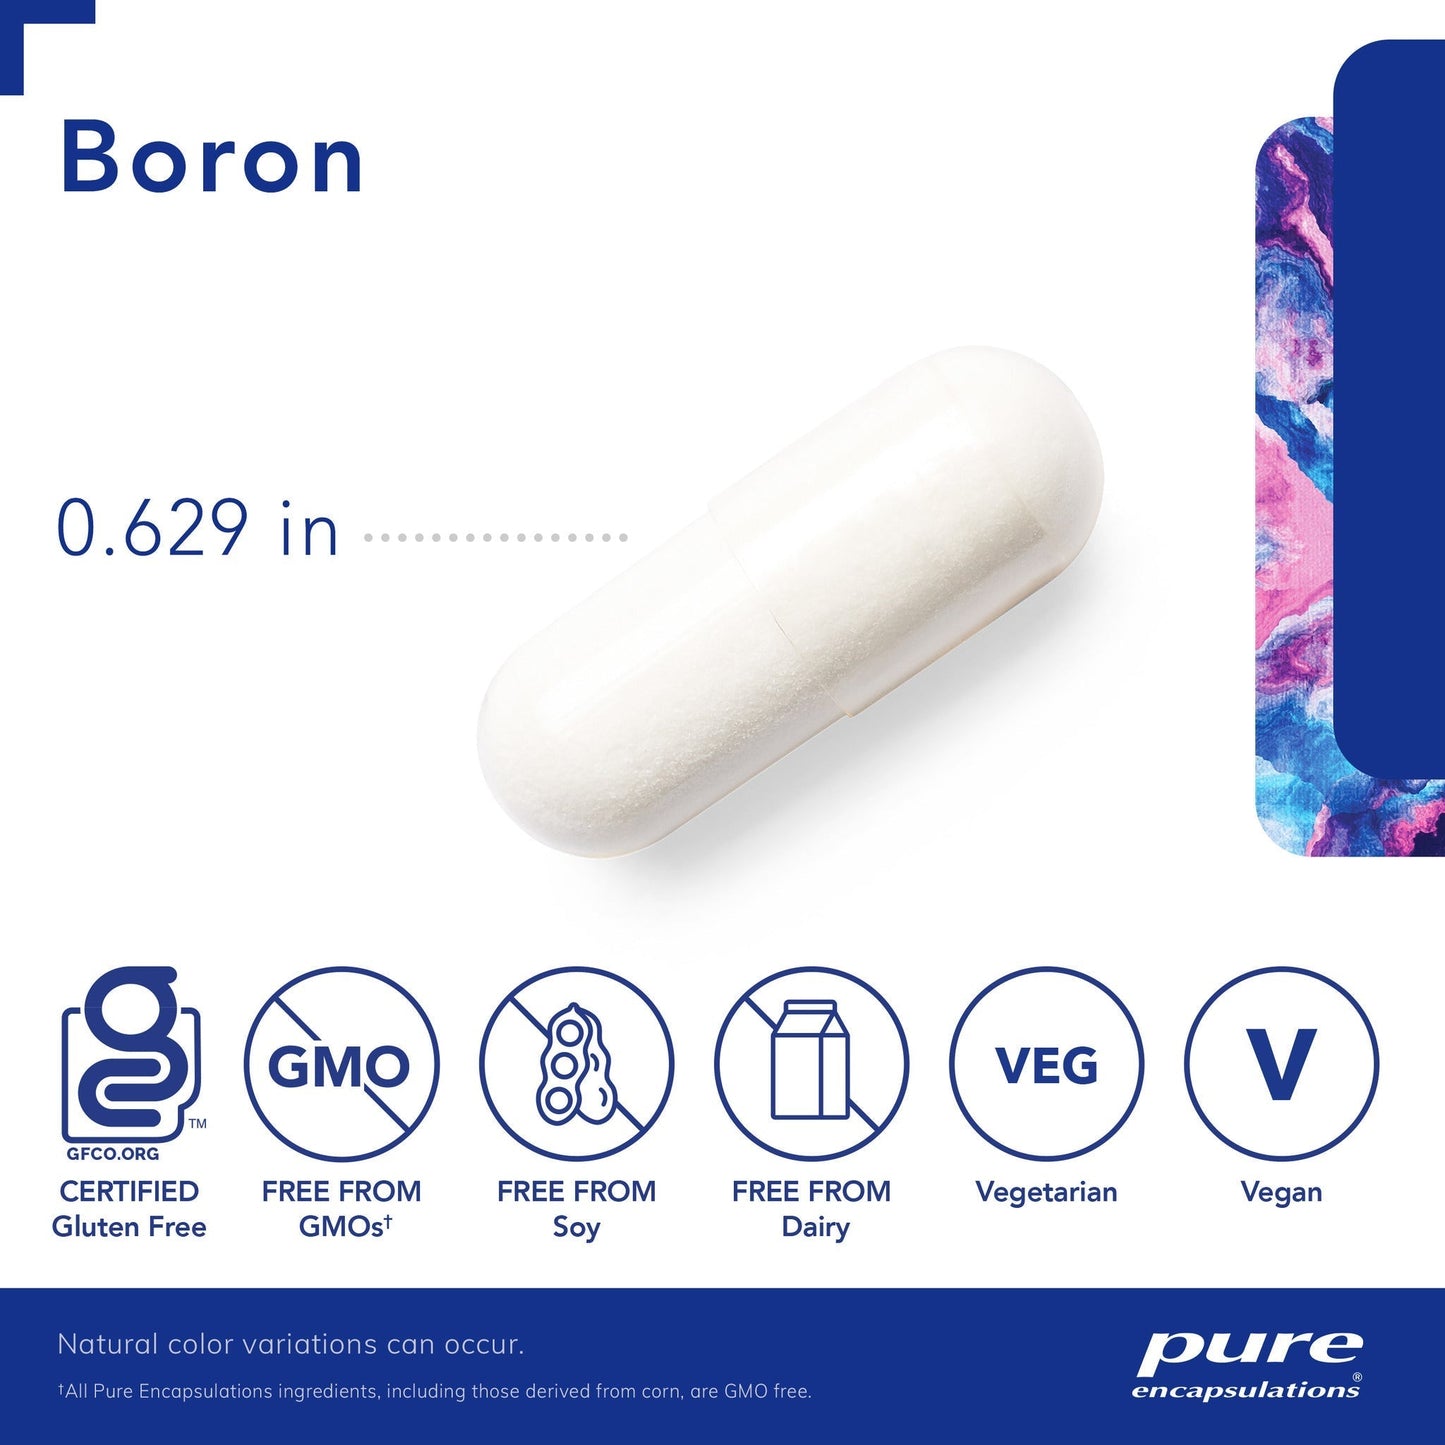 Boron (glycinate)